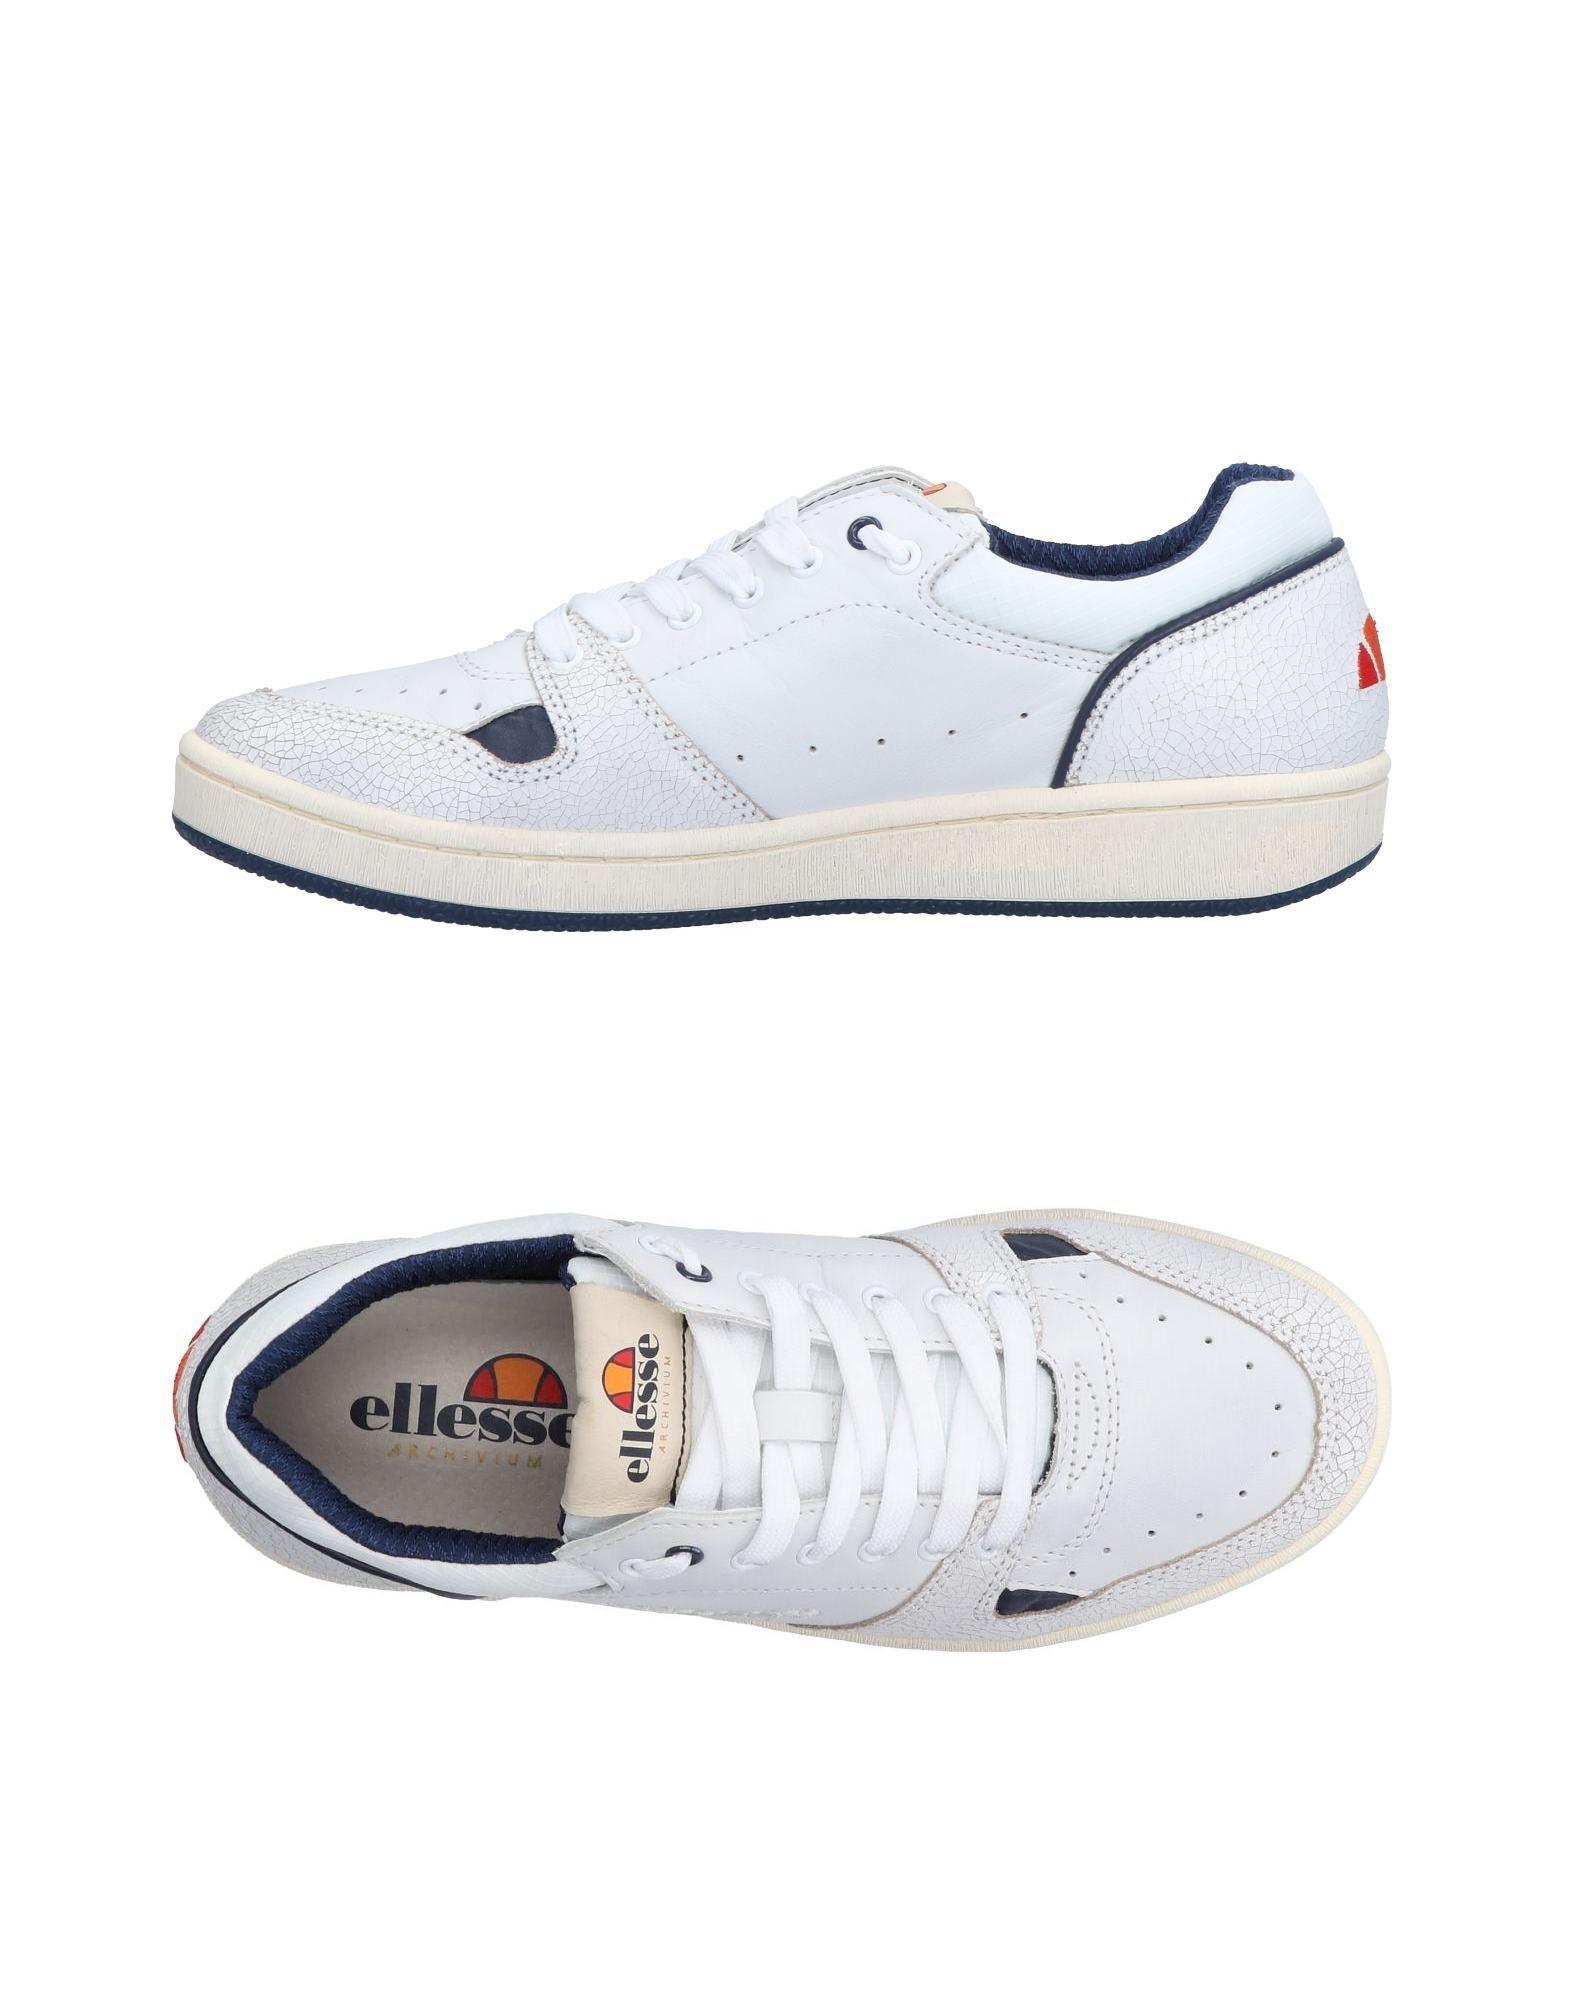 Ellesse Rubber Low-tops & Sneakers in White for Men - Lyst